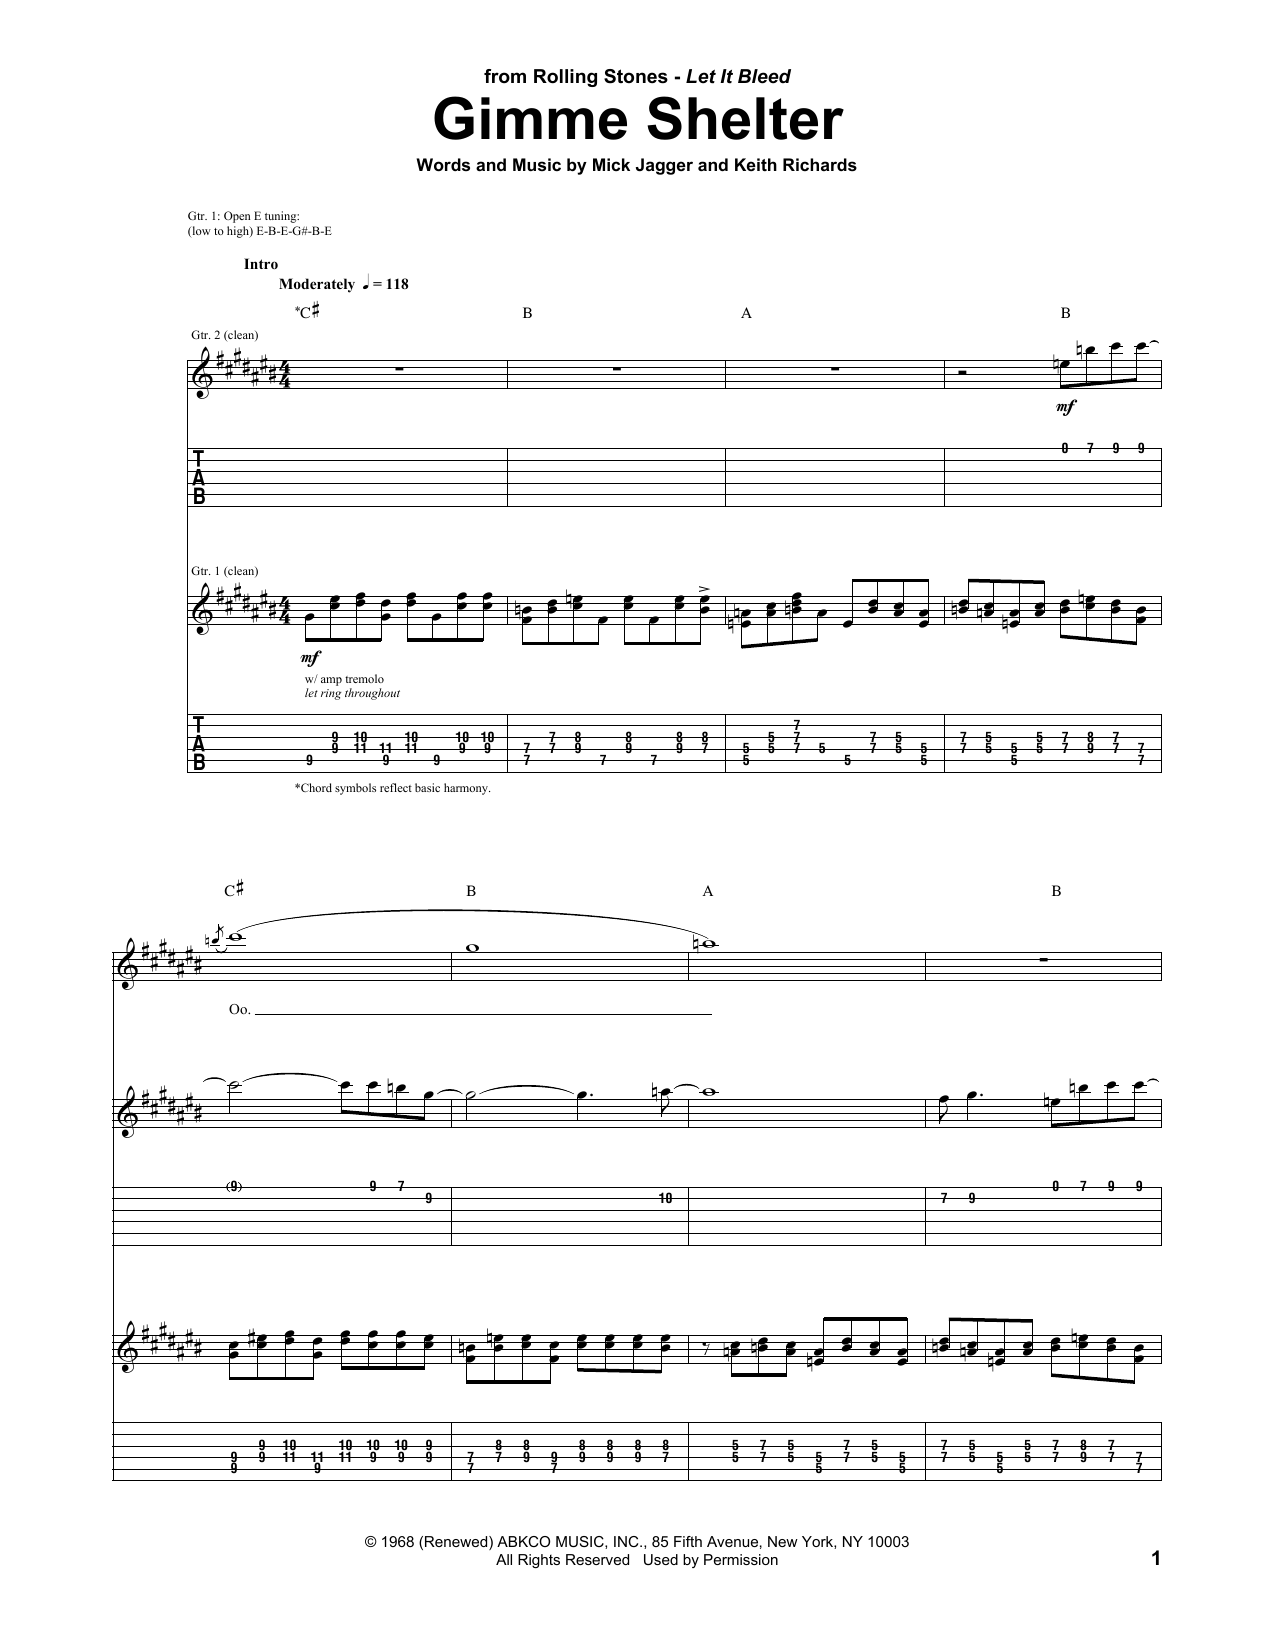 Rolling Stones Gimme Shelter Sheet Music Notes & Chords for Guitar Chords/Lyrics - Download or Print PDF